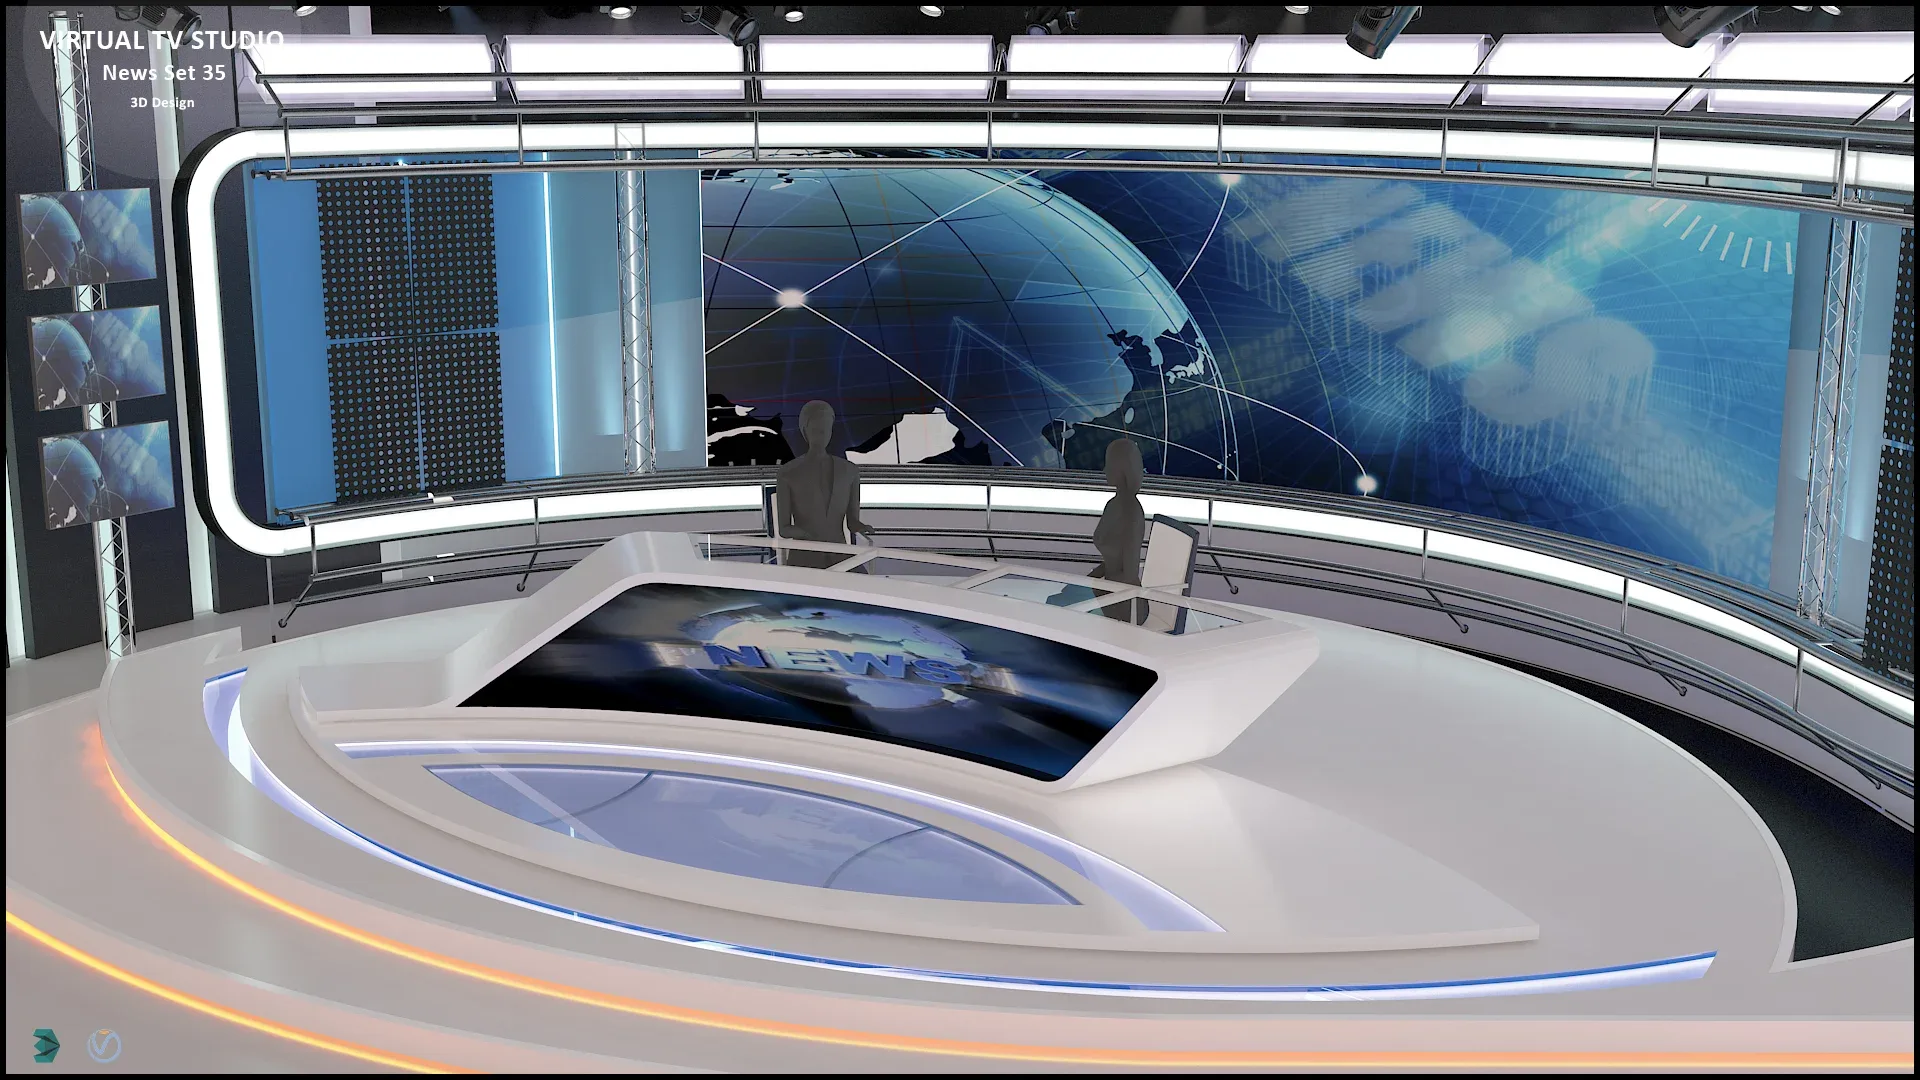 Virtual TV Studio Sets - Collection Vol 16 - 9 PCS DESIGN